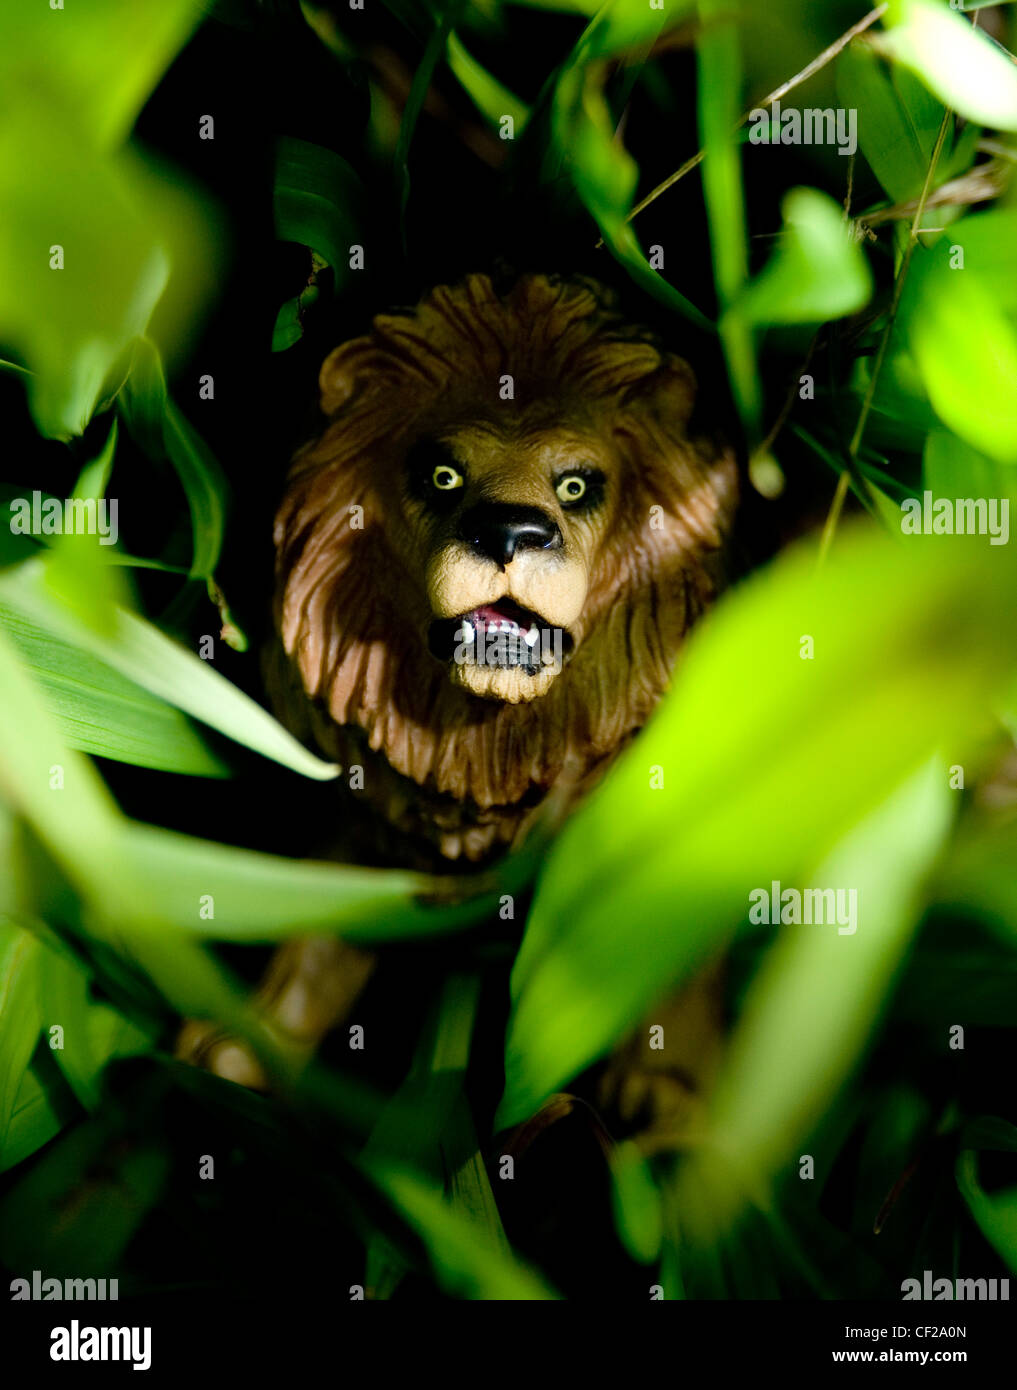 WD1490-10 HoroscopesLeoA plastic toy lion looking through leaves Stock Photo